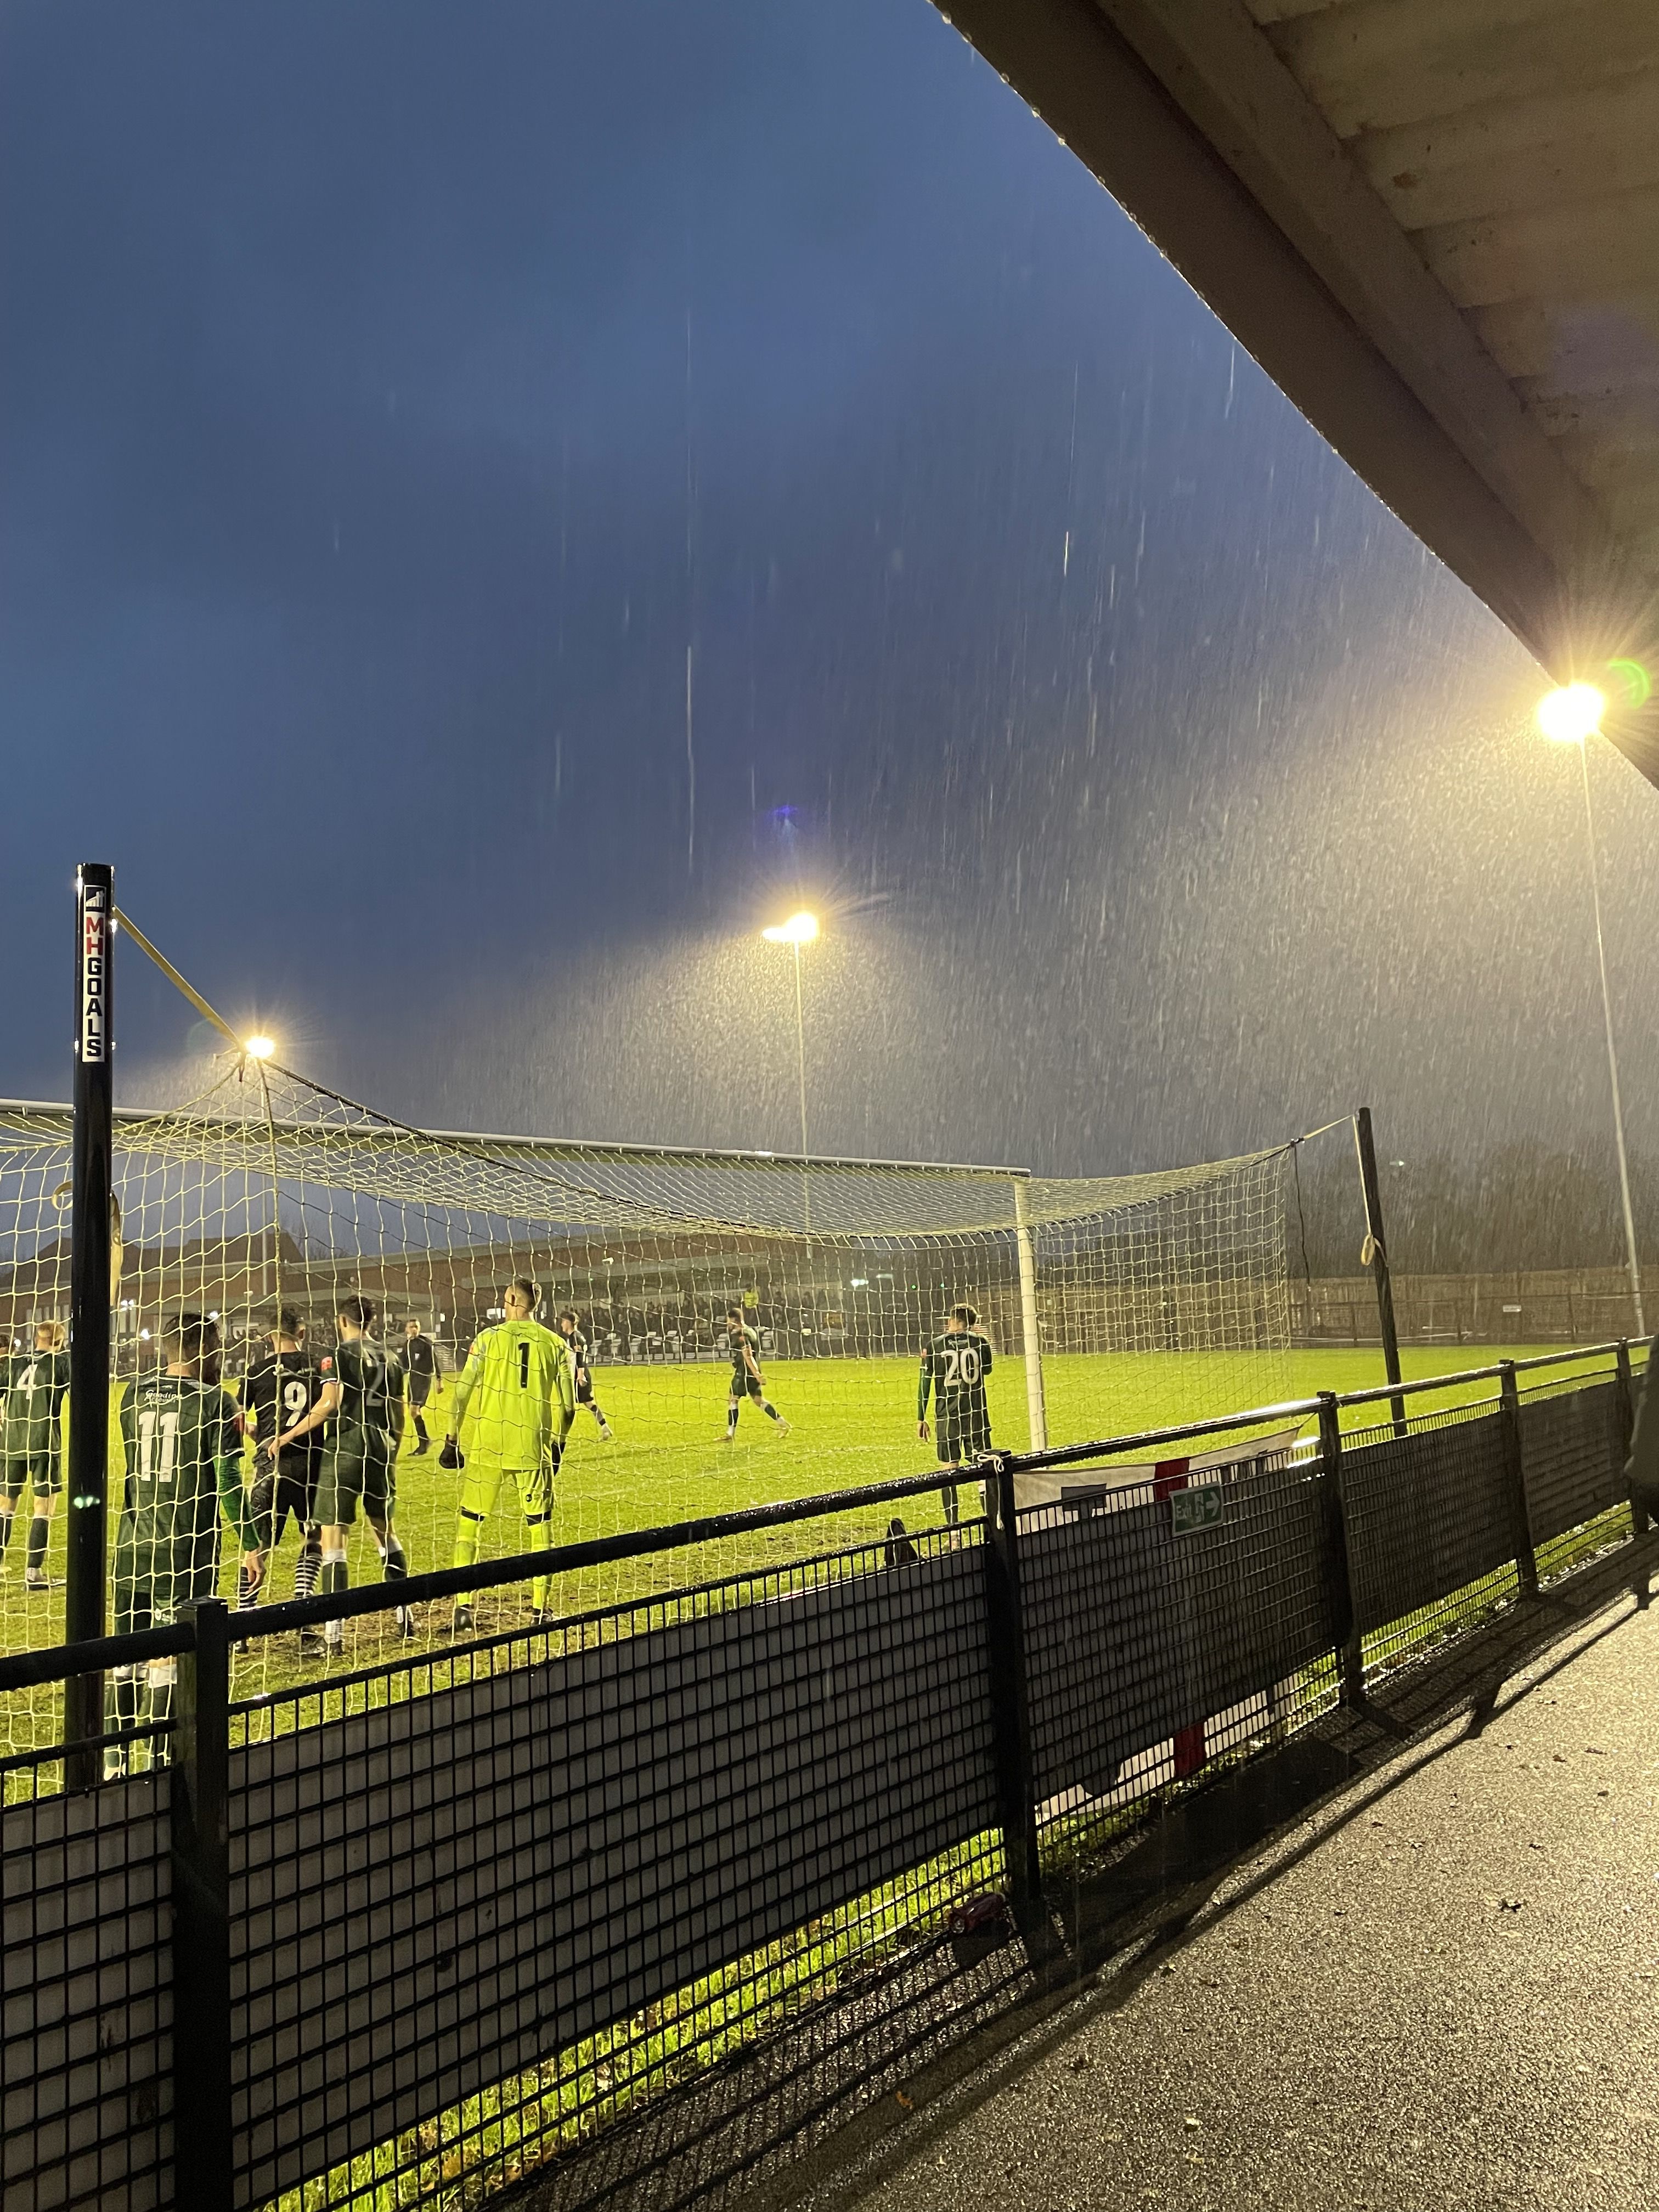 Wimborne playing in the rain